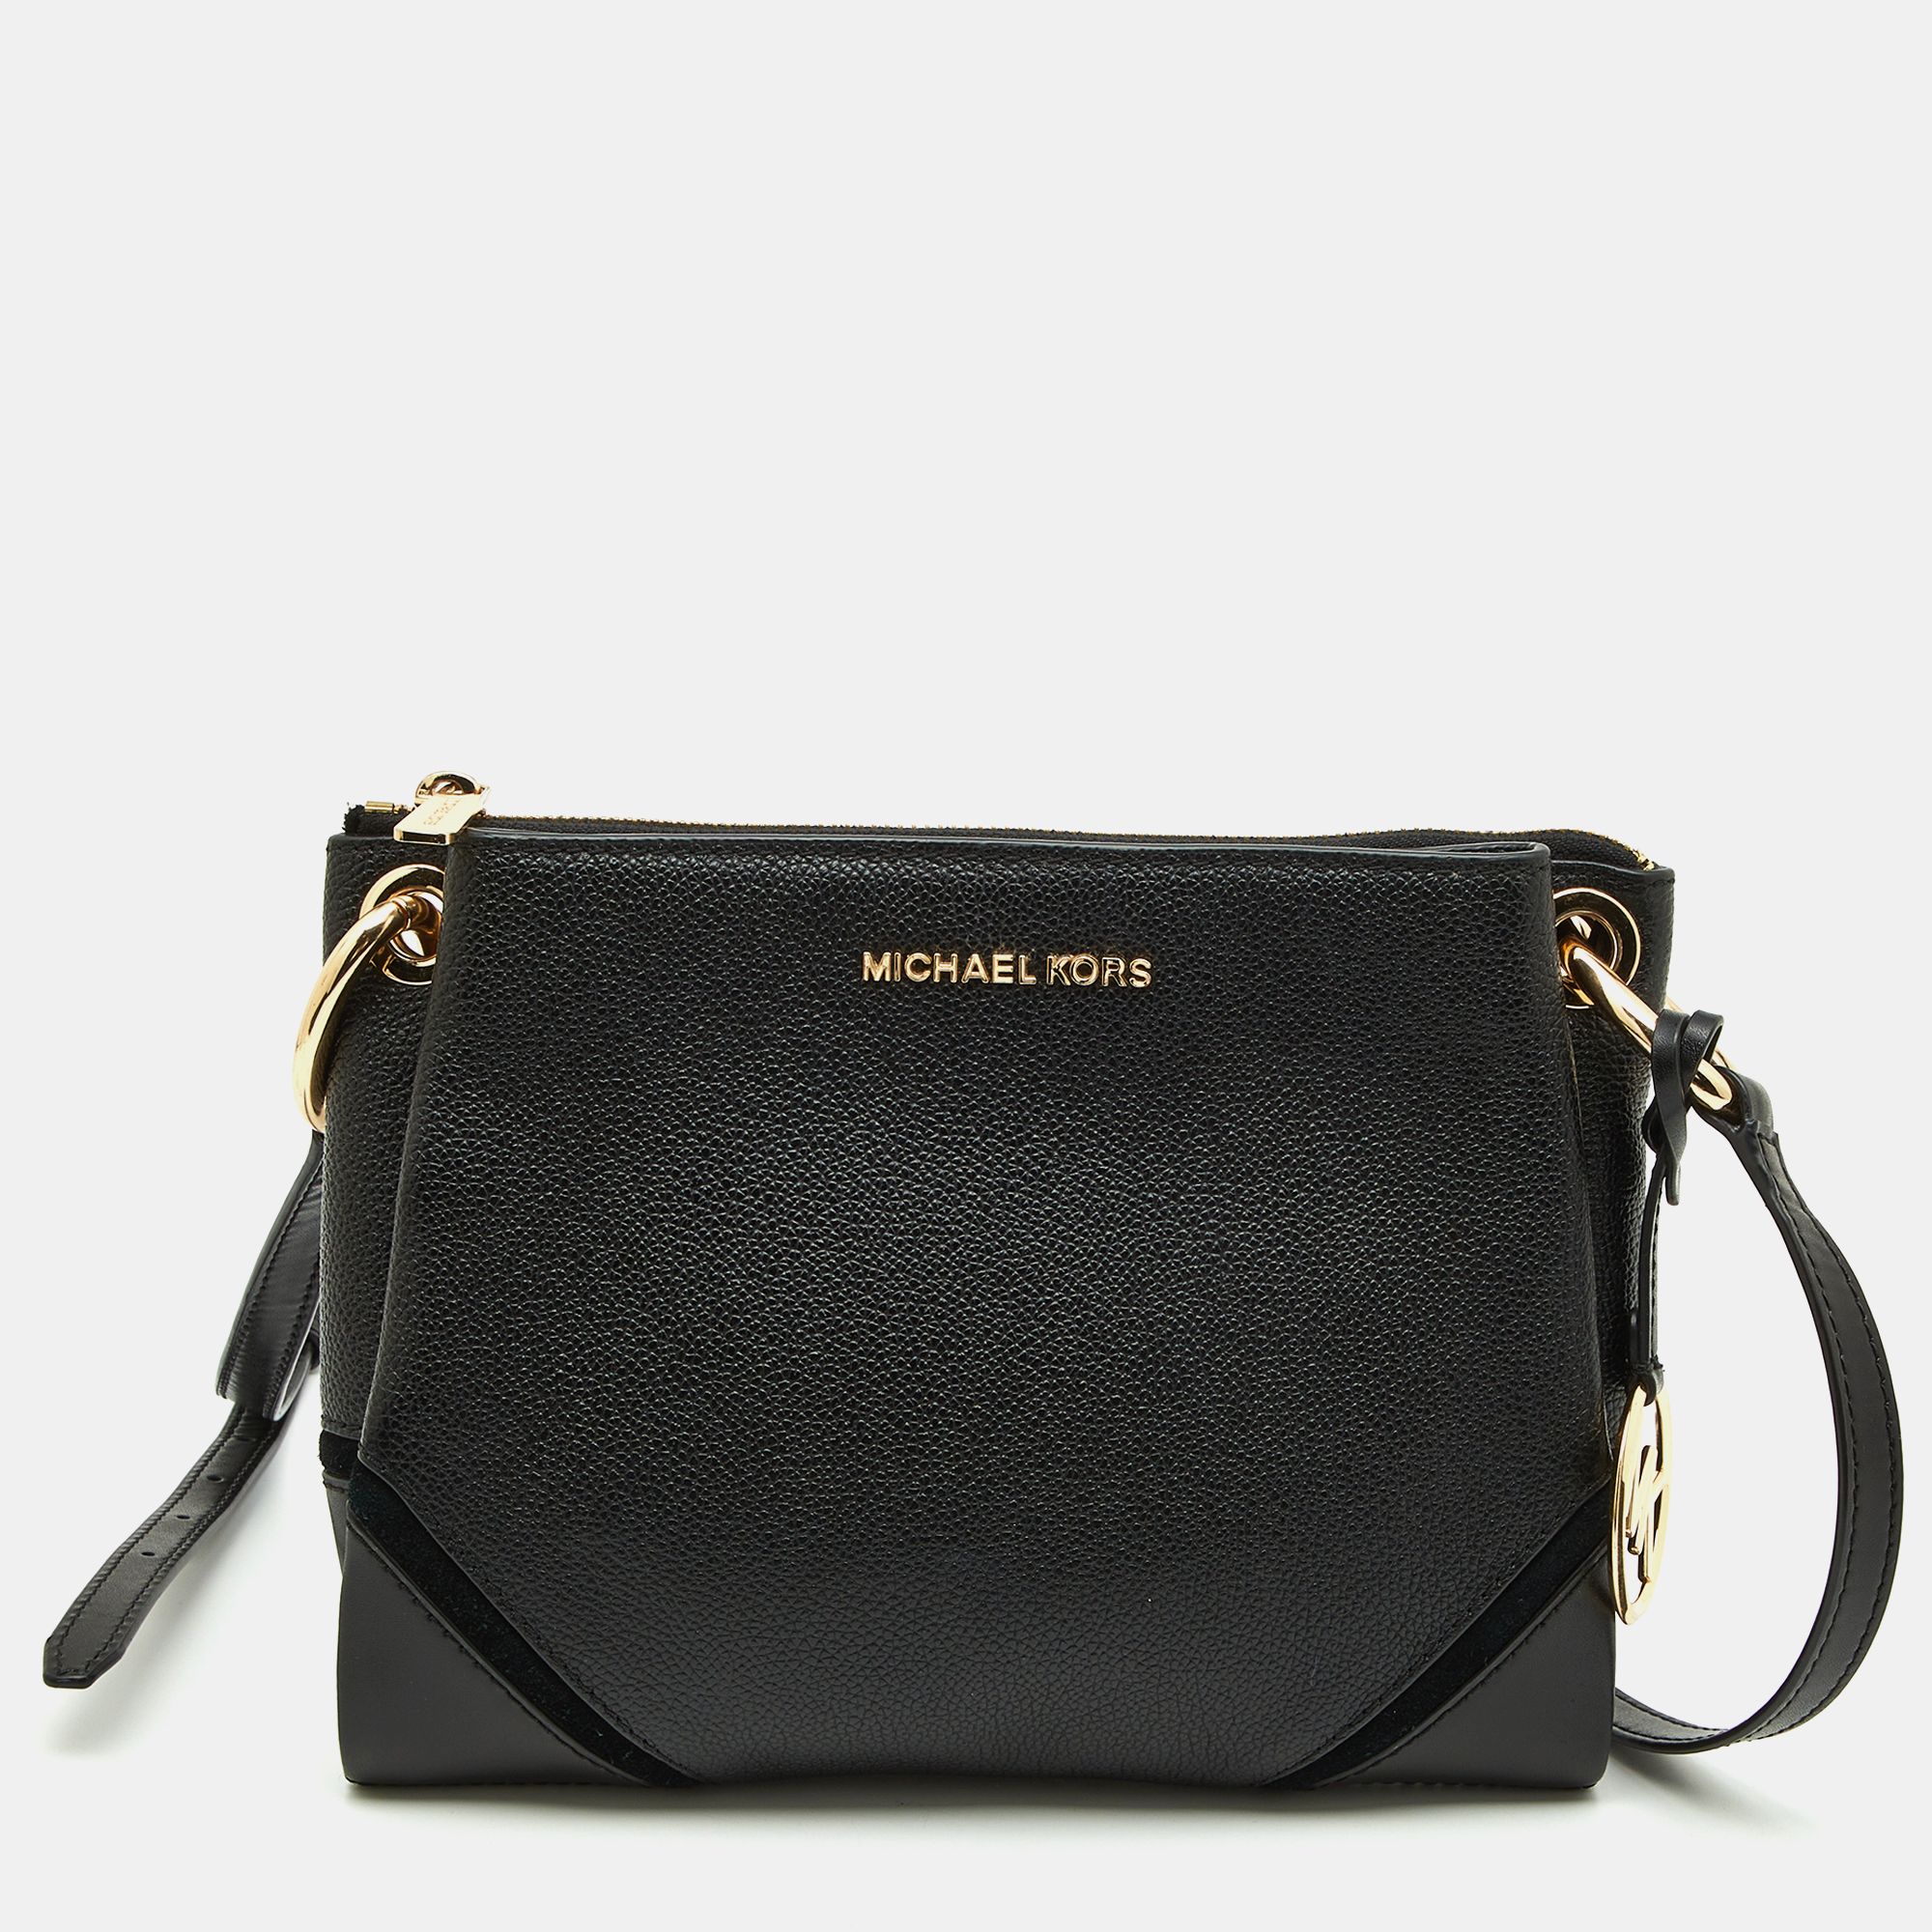 Pre-owned Michael Kors Black Leather Nicole Crossbody Bag